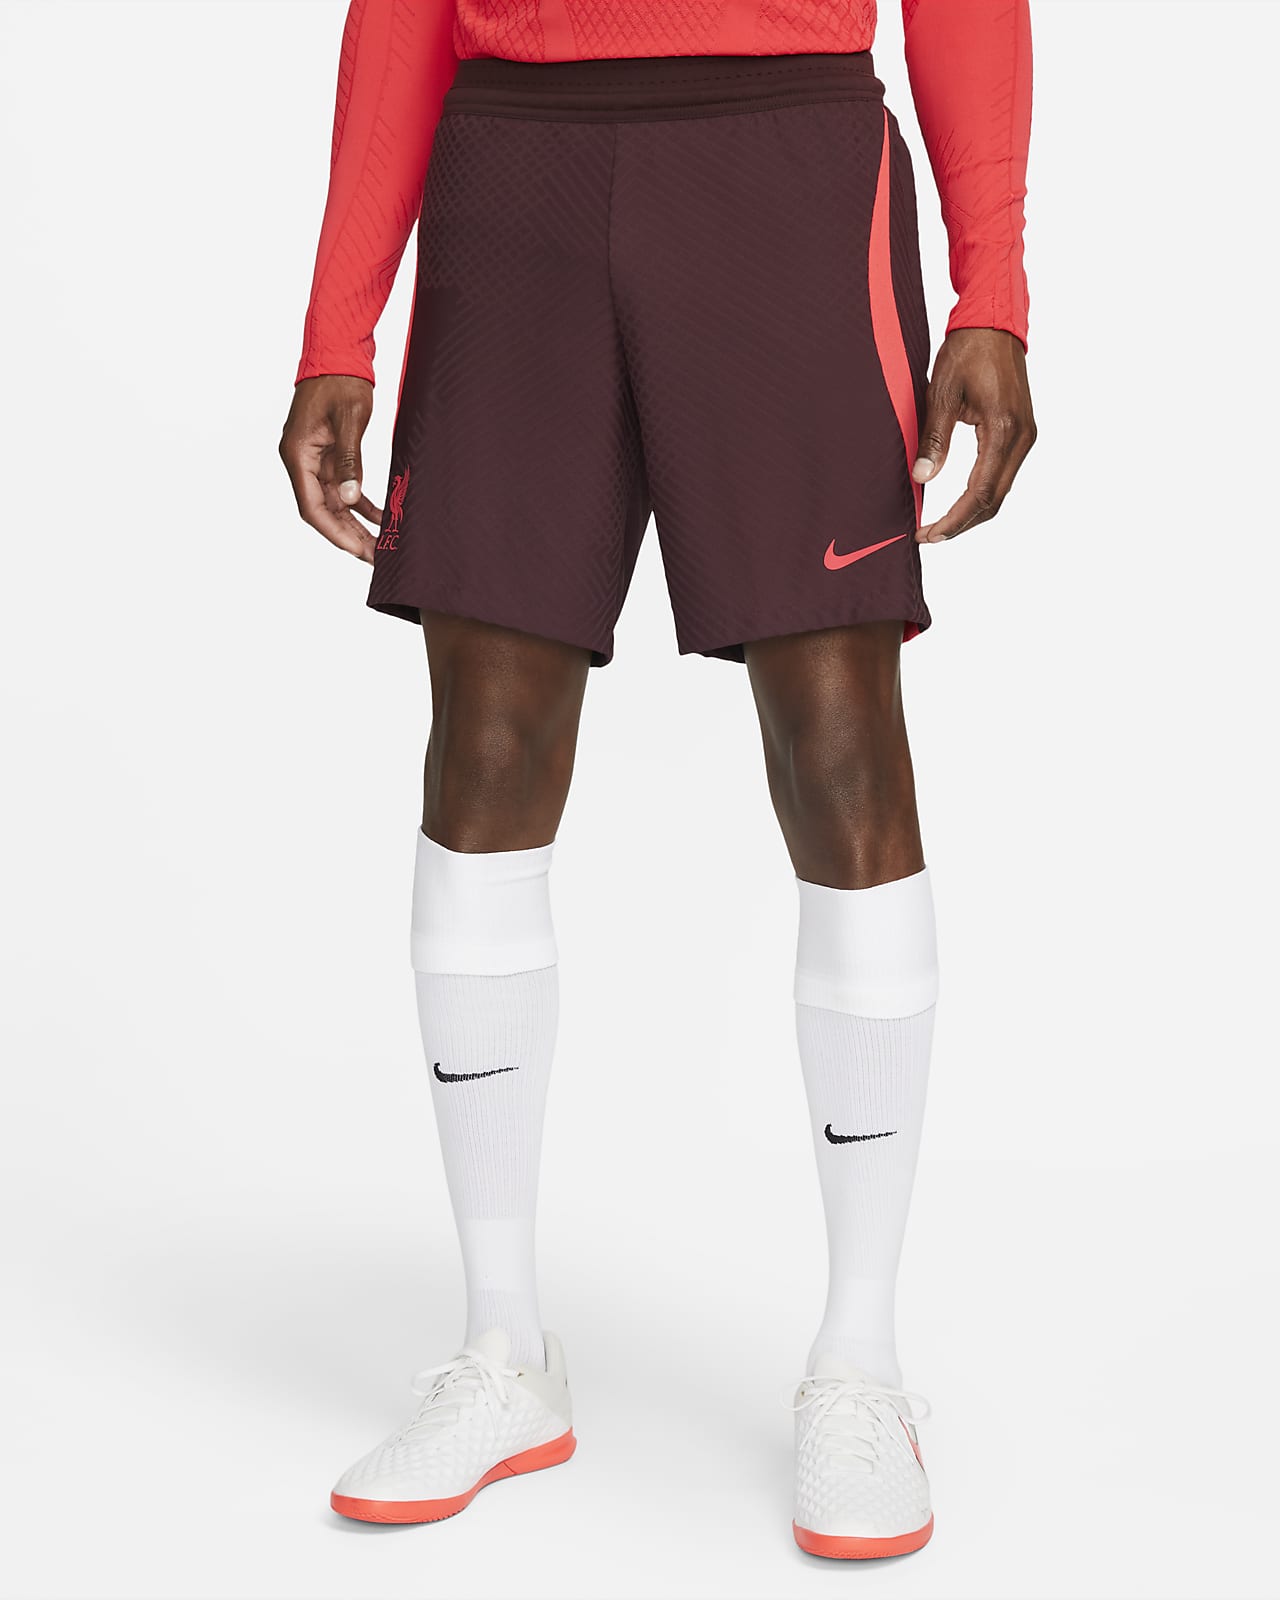 Liverpool FC Strike Elite Nike Dri-FIT ADV Herren-Fußballshorts aus Strickmaterial